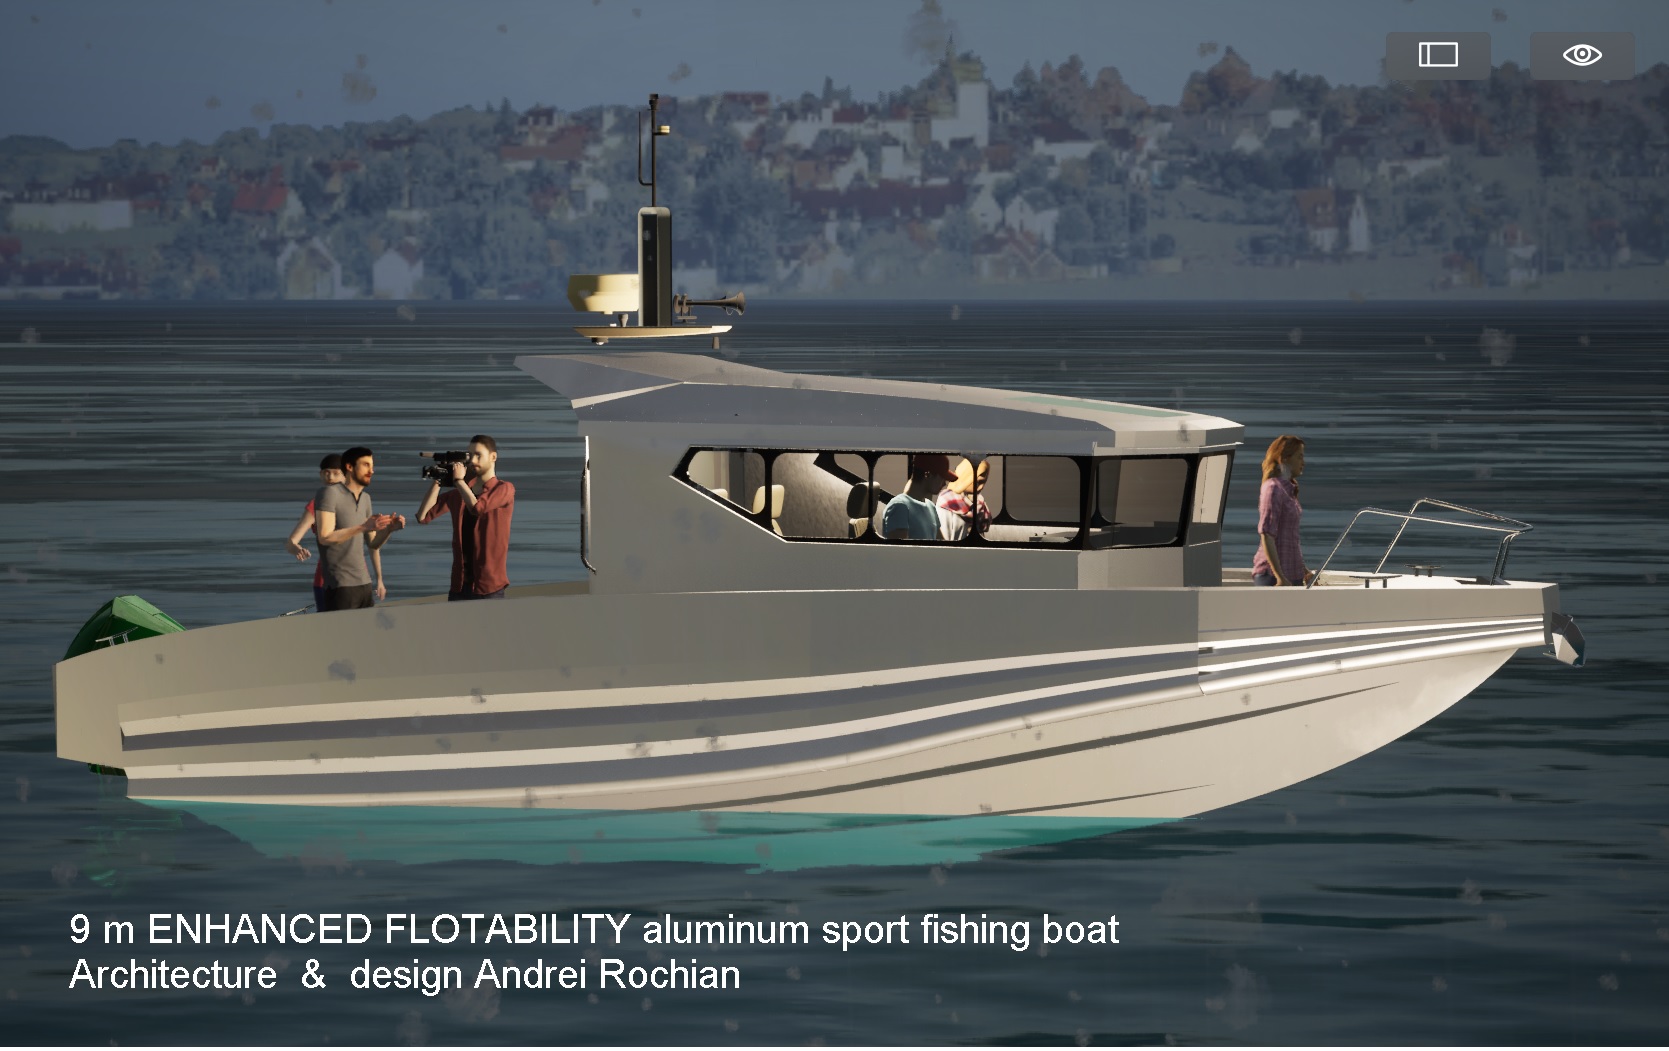 9 m 增强浮动性铝制运动钓鱼高速船